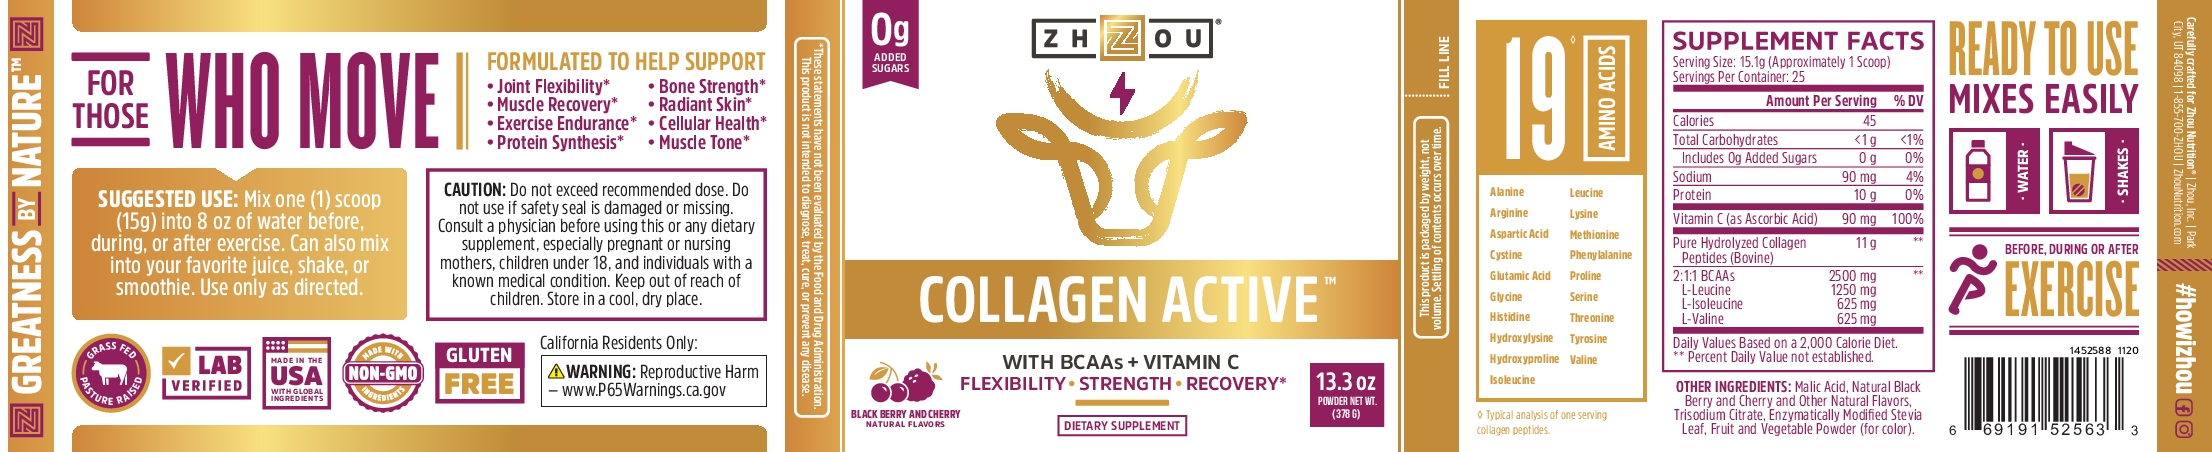 ZHOU Nutrition Collagen Active Black Berry 13.3 oz